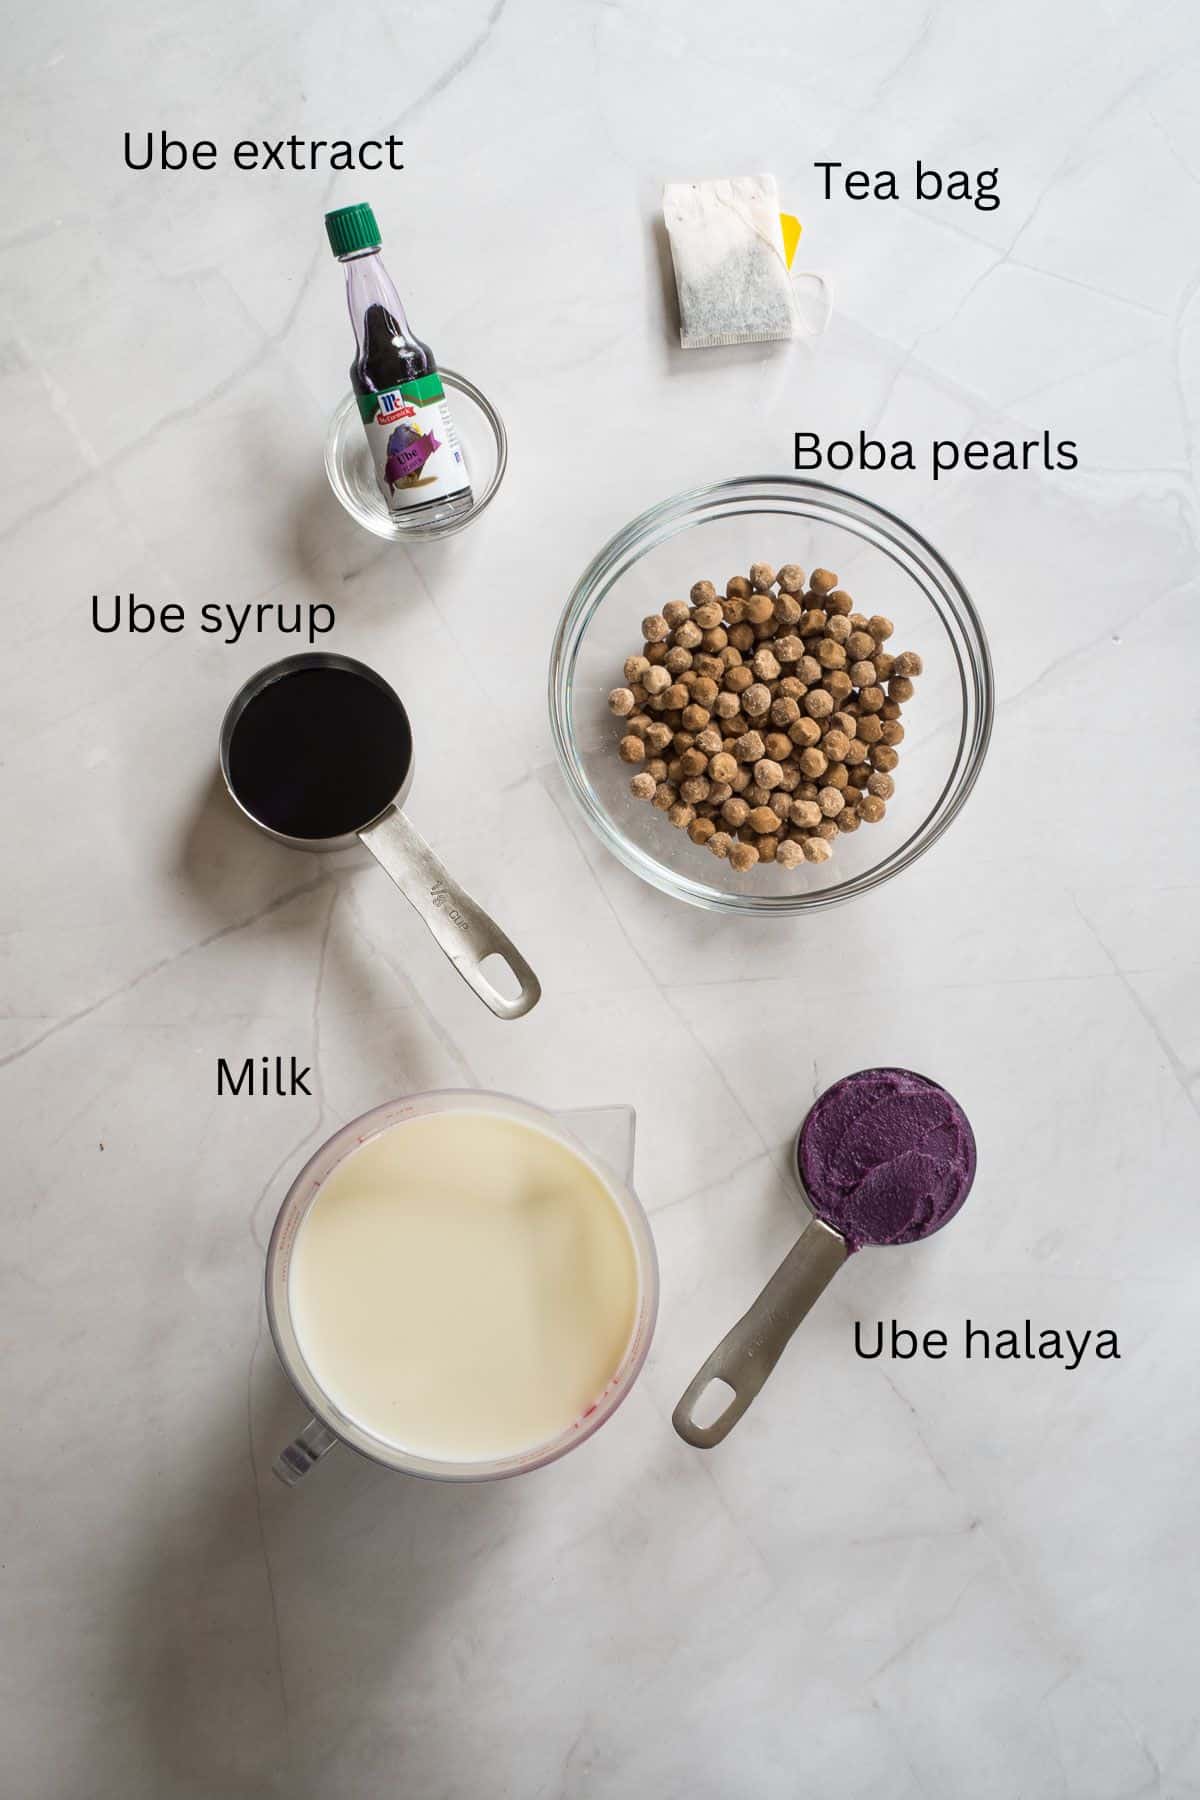 Tea bag, boba pearls, ube halaya, milk, ube syrup and ube extract against marble background.